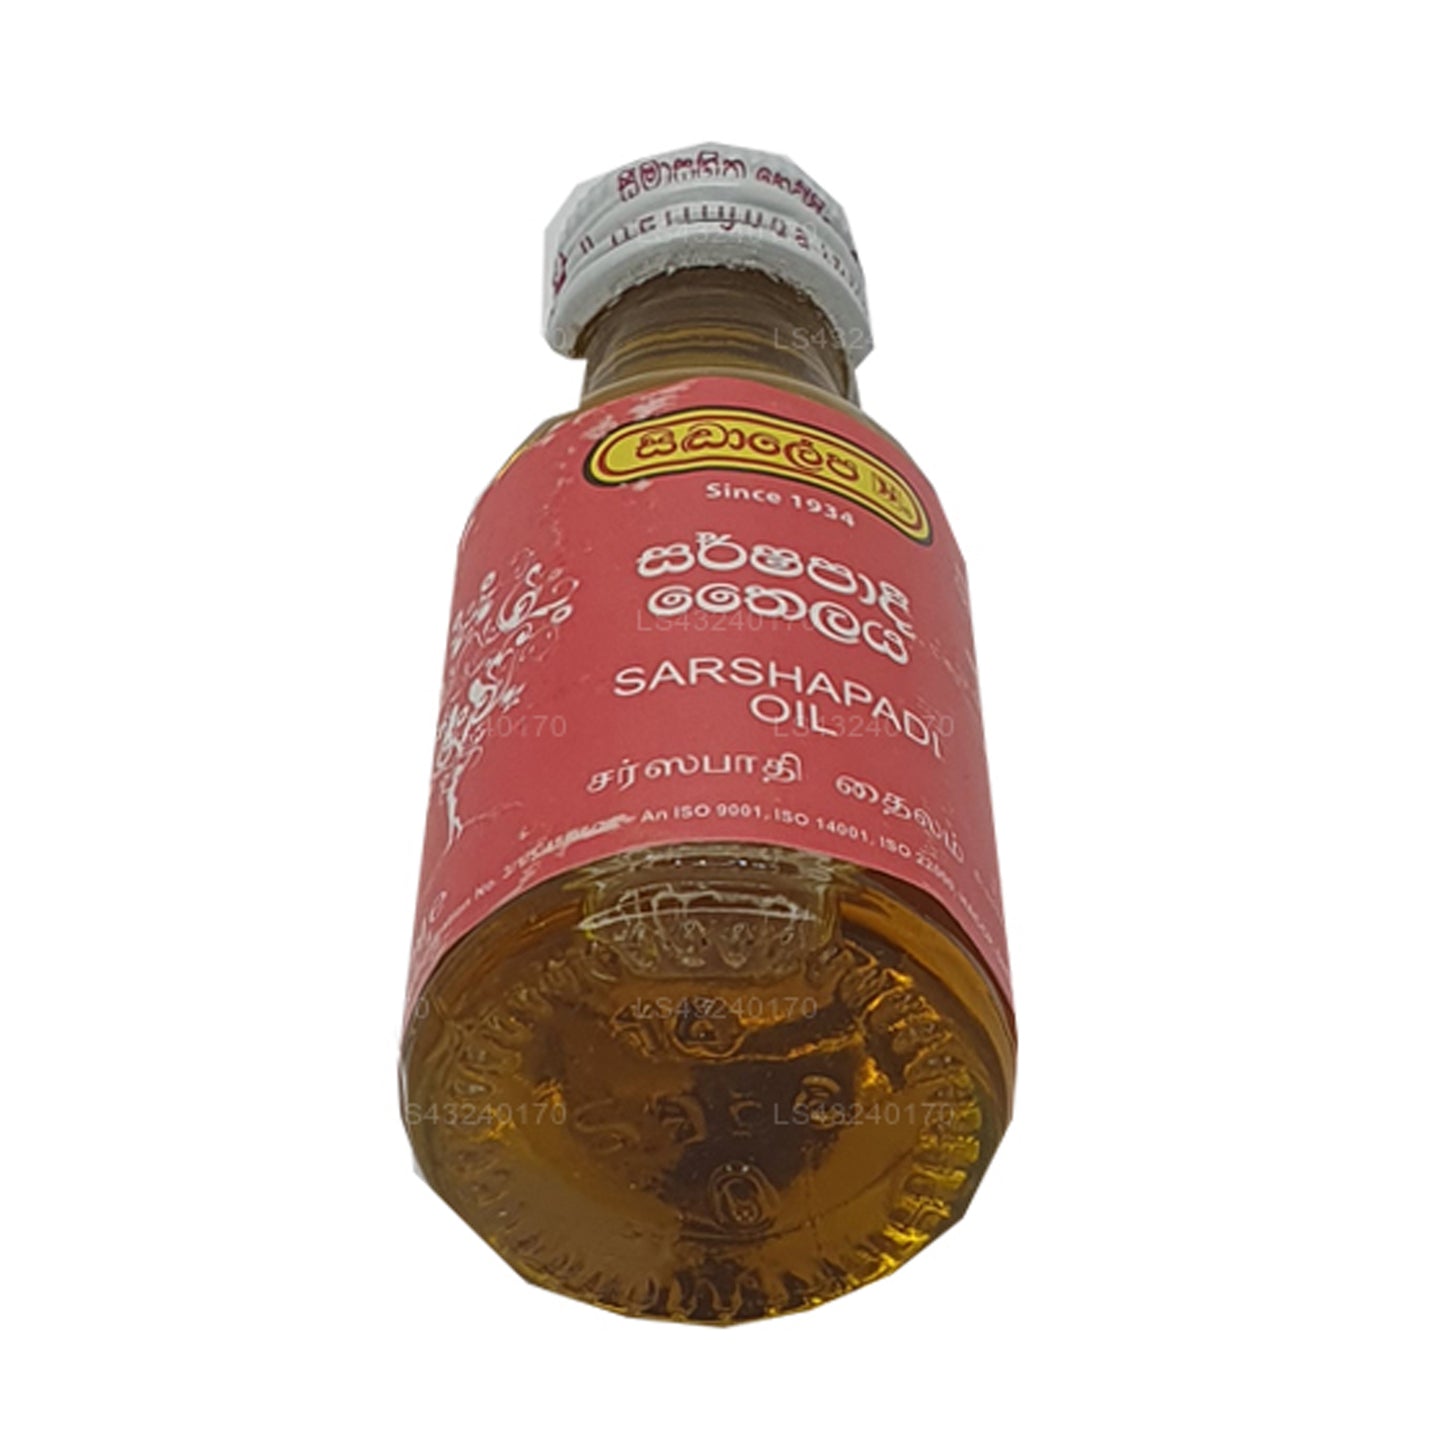 Siddhalepa Sarshapadi Oil (30ml)